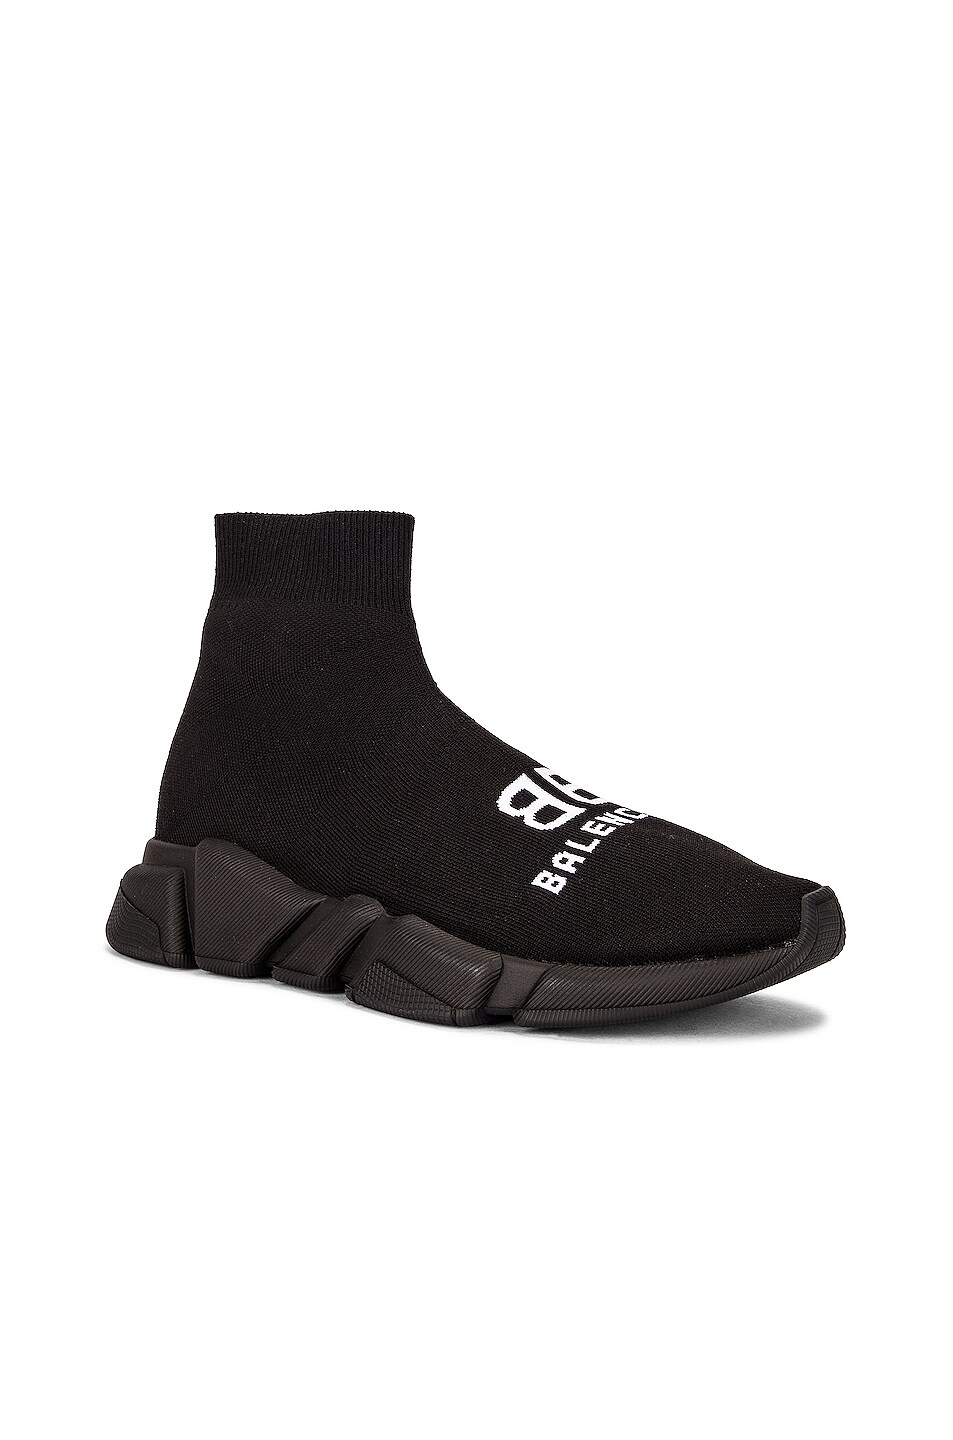 Balenciaga Recycle Speed Sneakers in Black & White & Black | FWRD